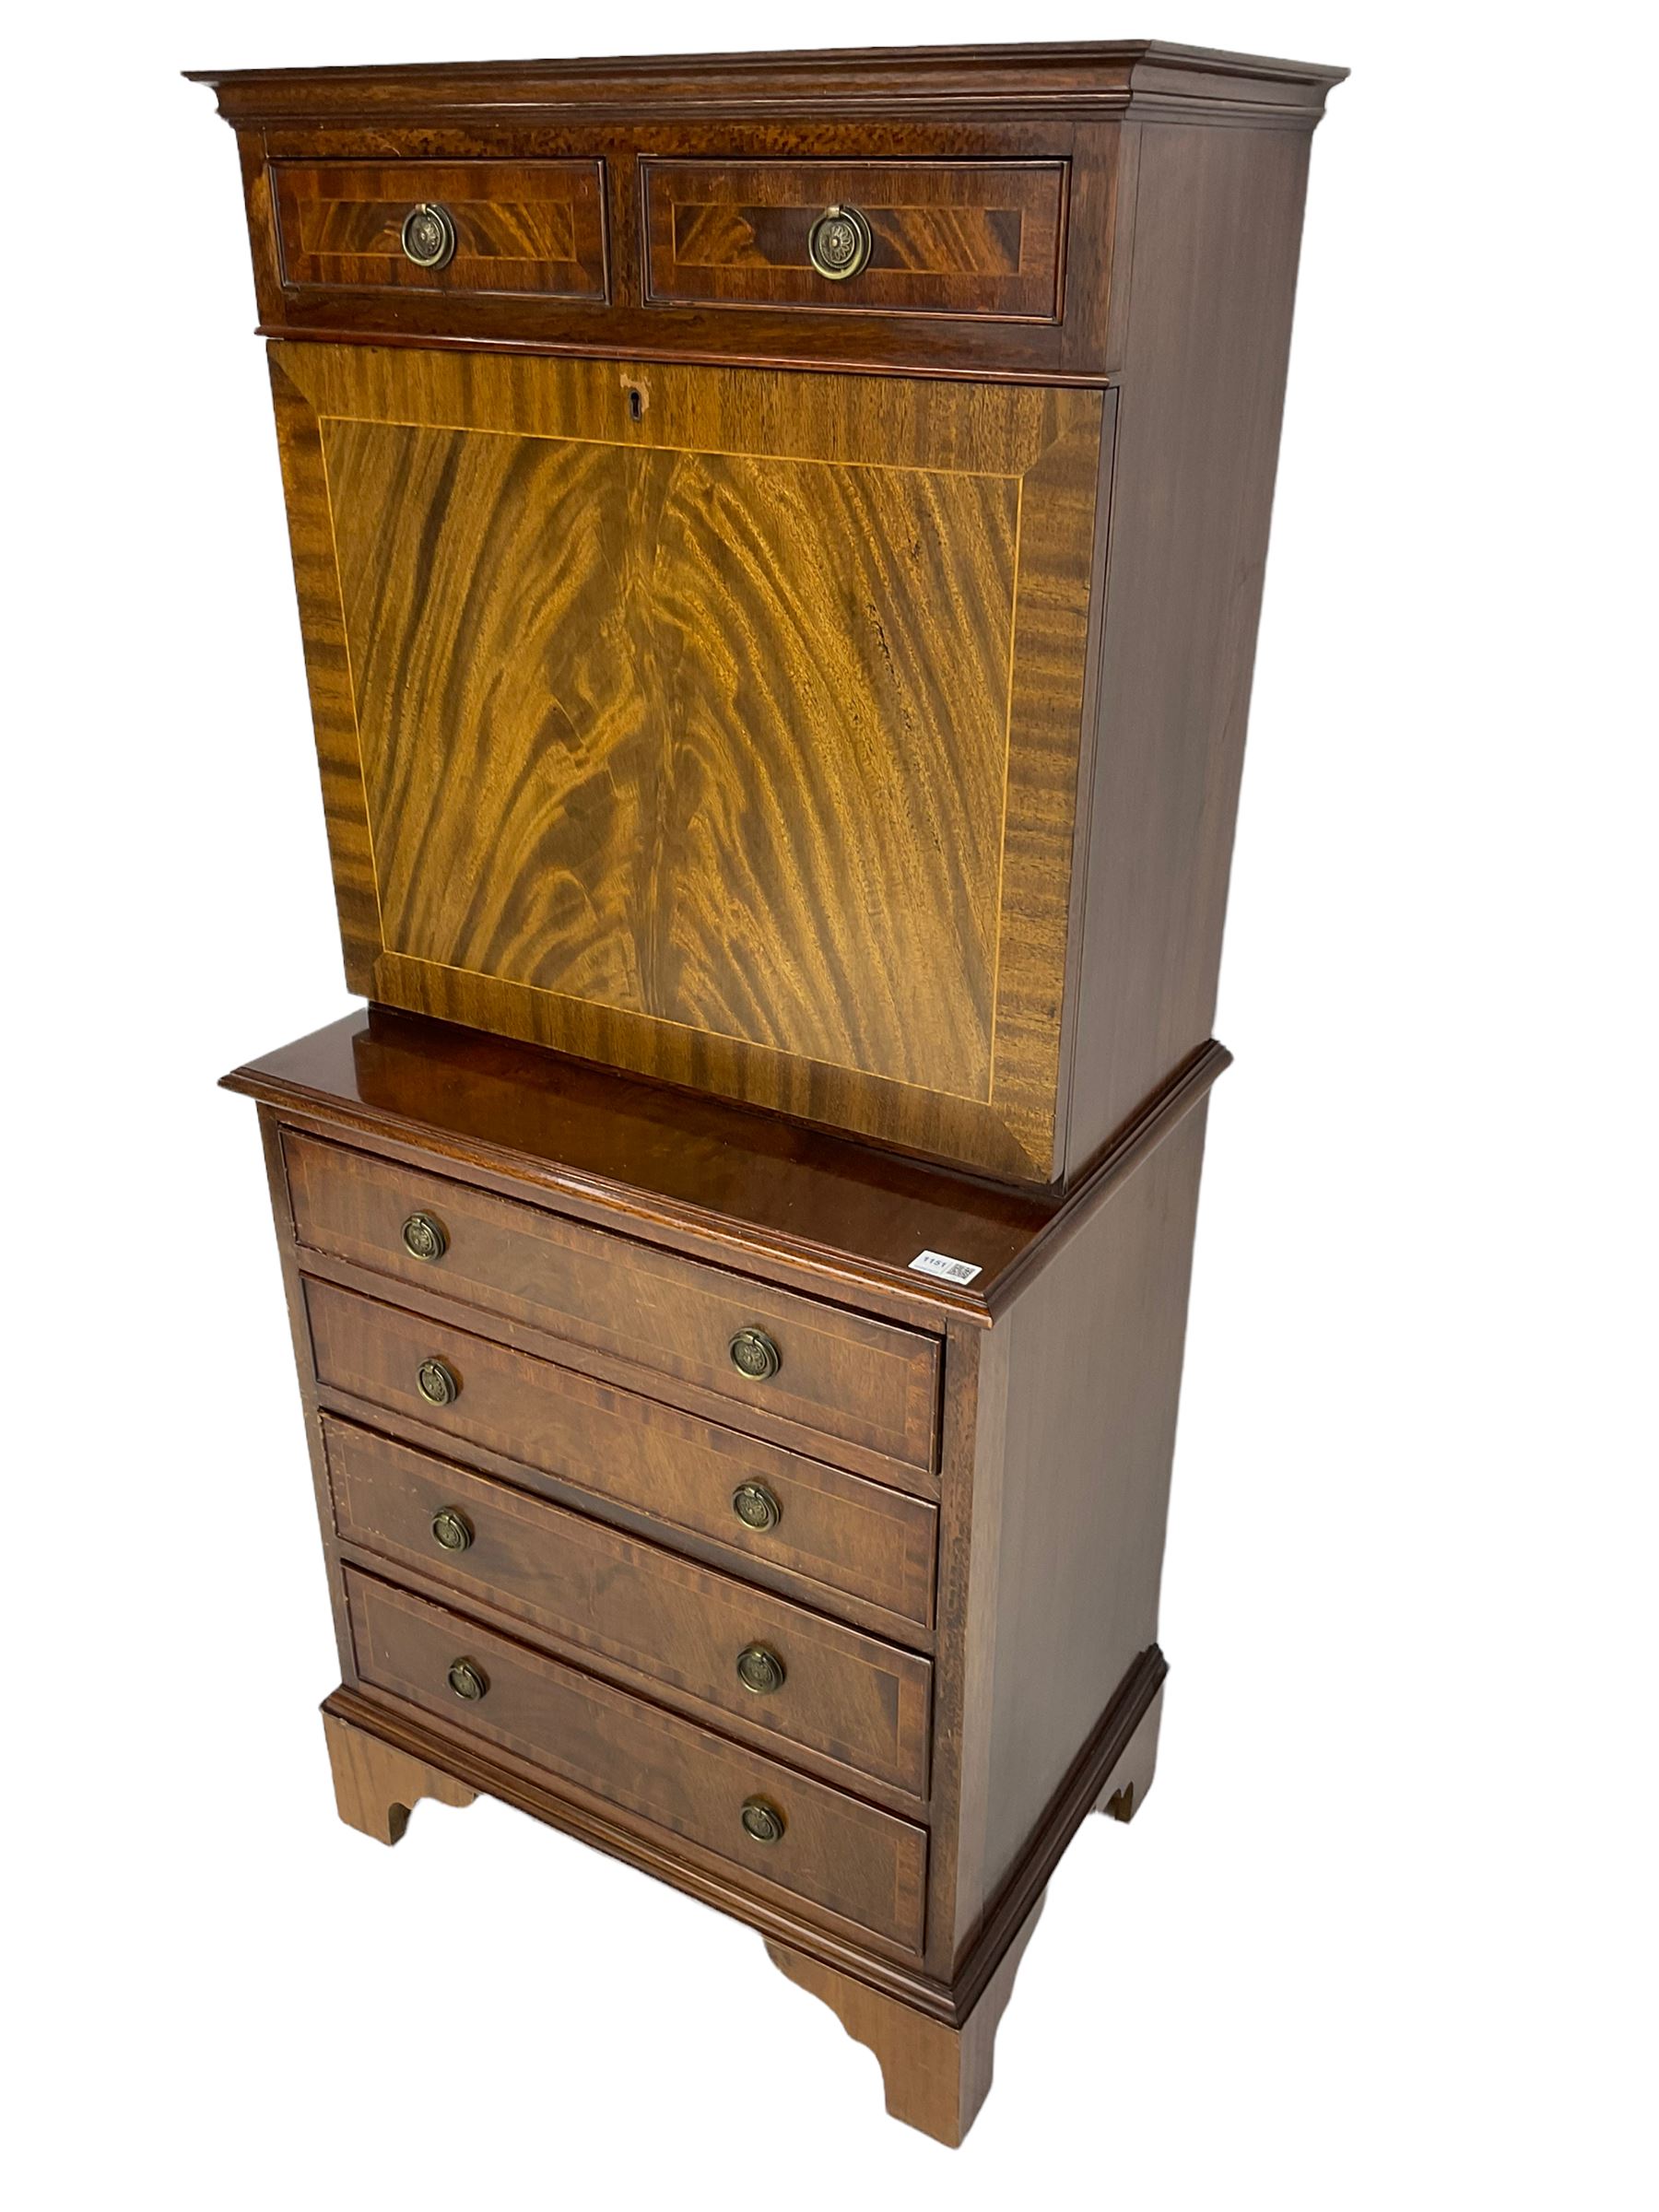 Shaw of London - mahogany secretaire chest - Image 8 of 8